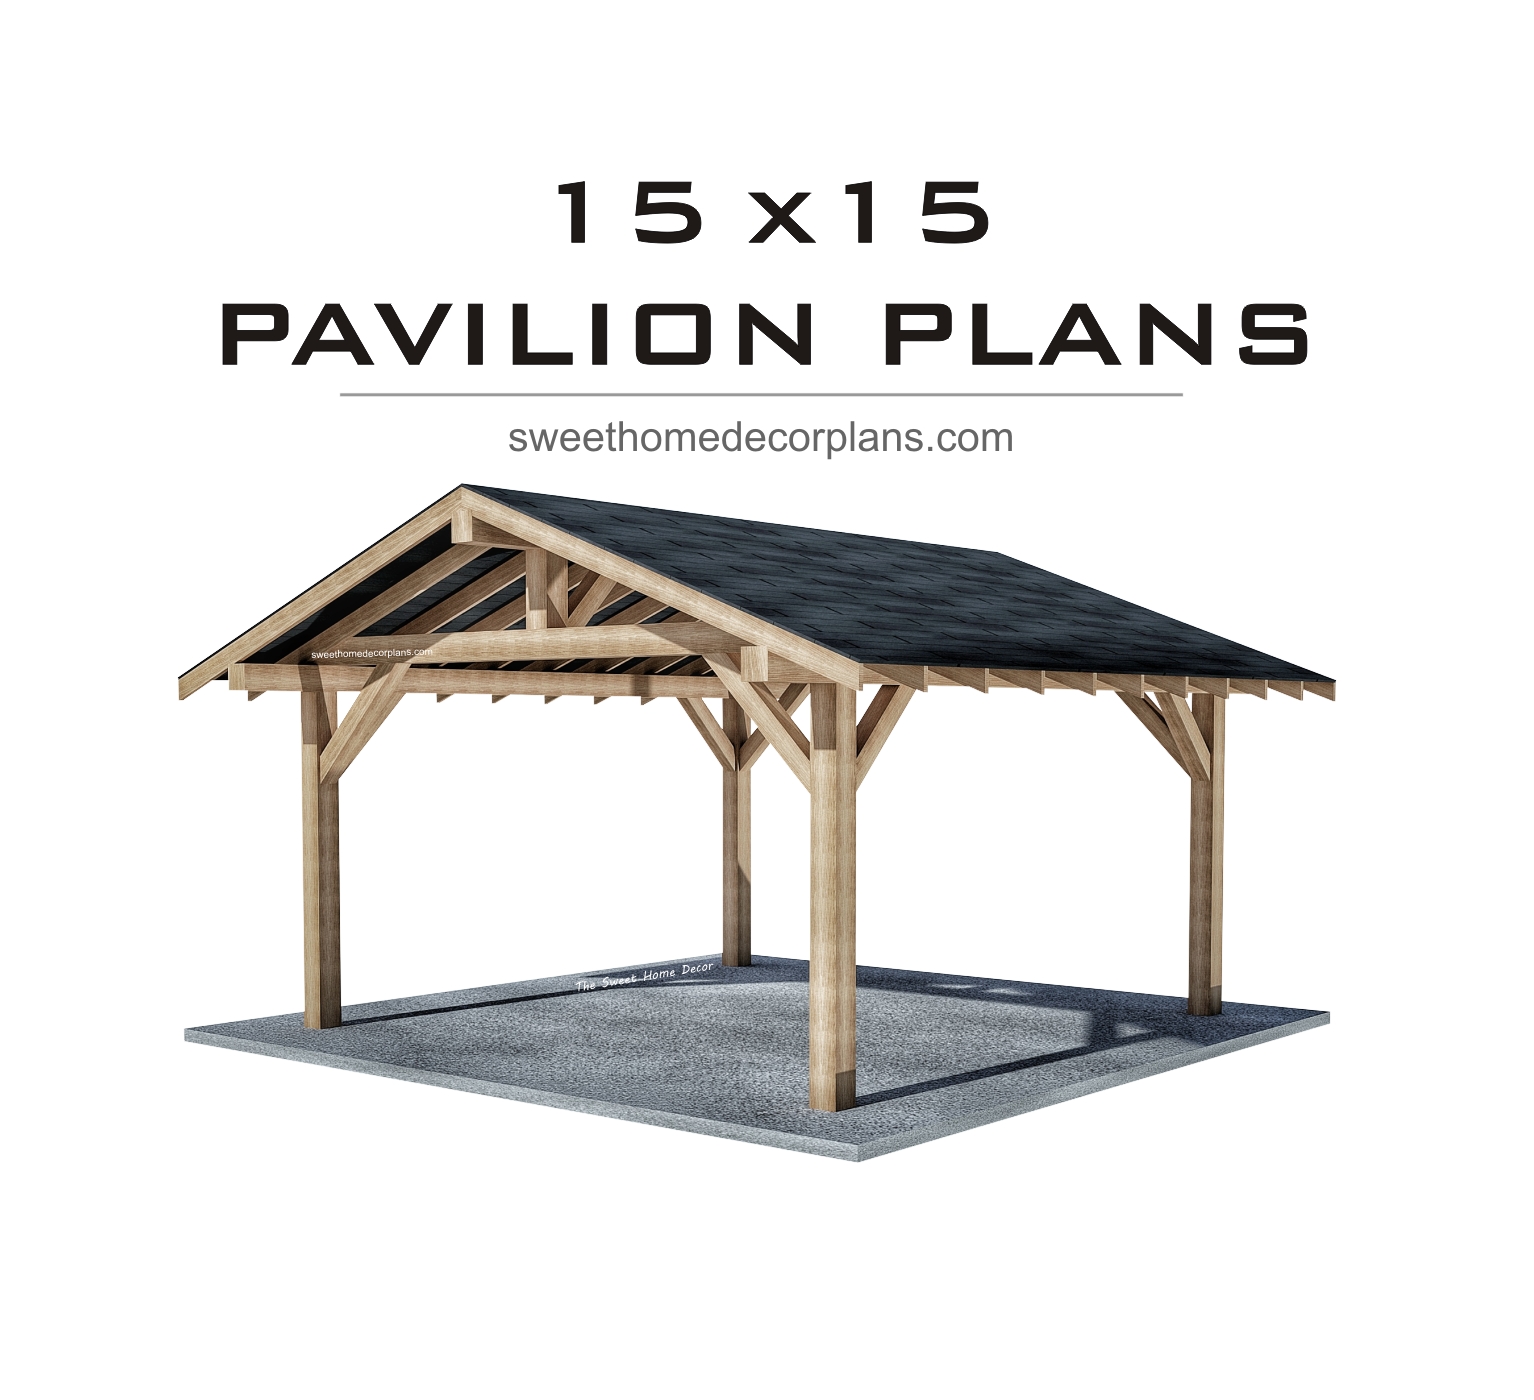 Diy-15-х-15-gable-pavilion-plans-carport-patio-gazebo